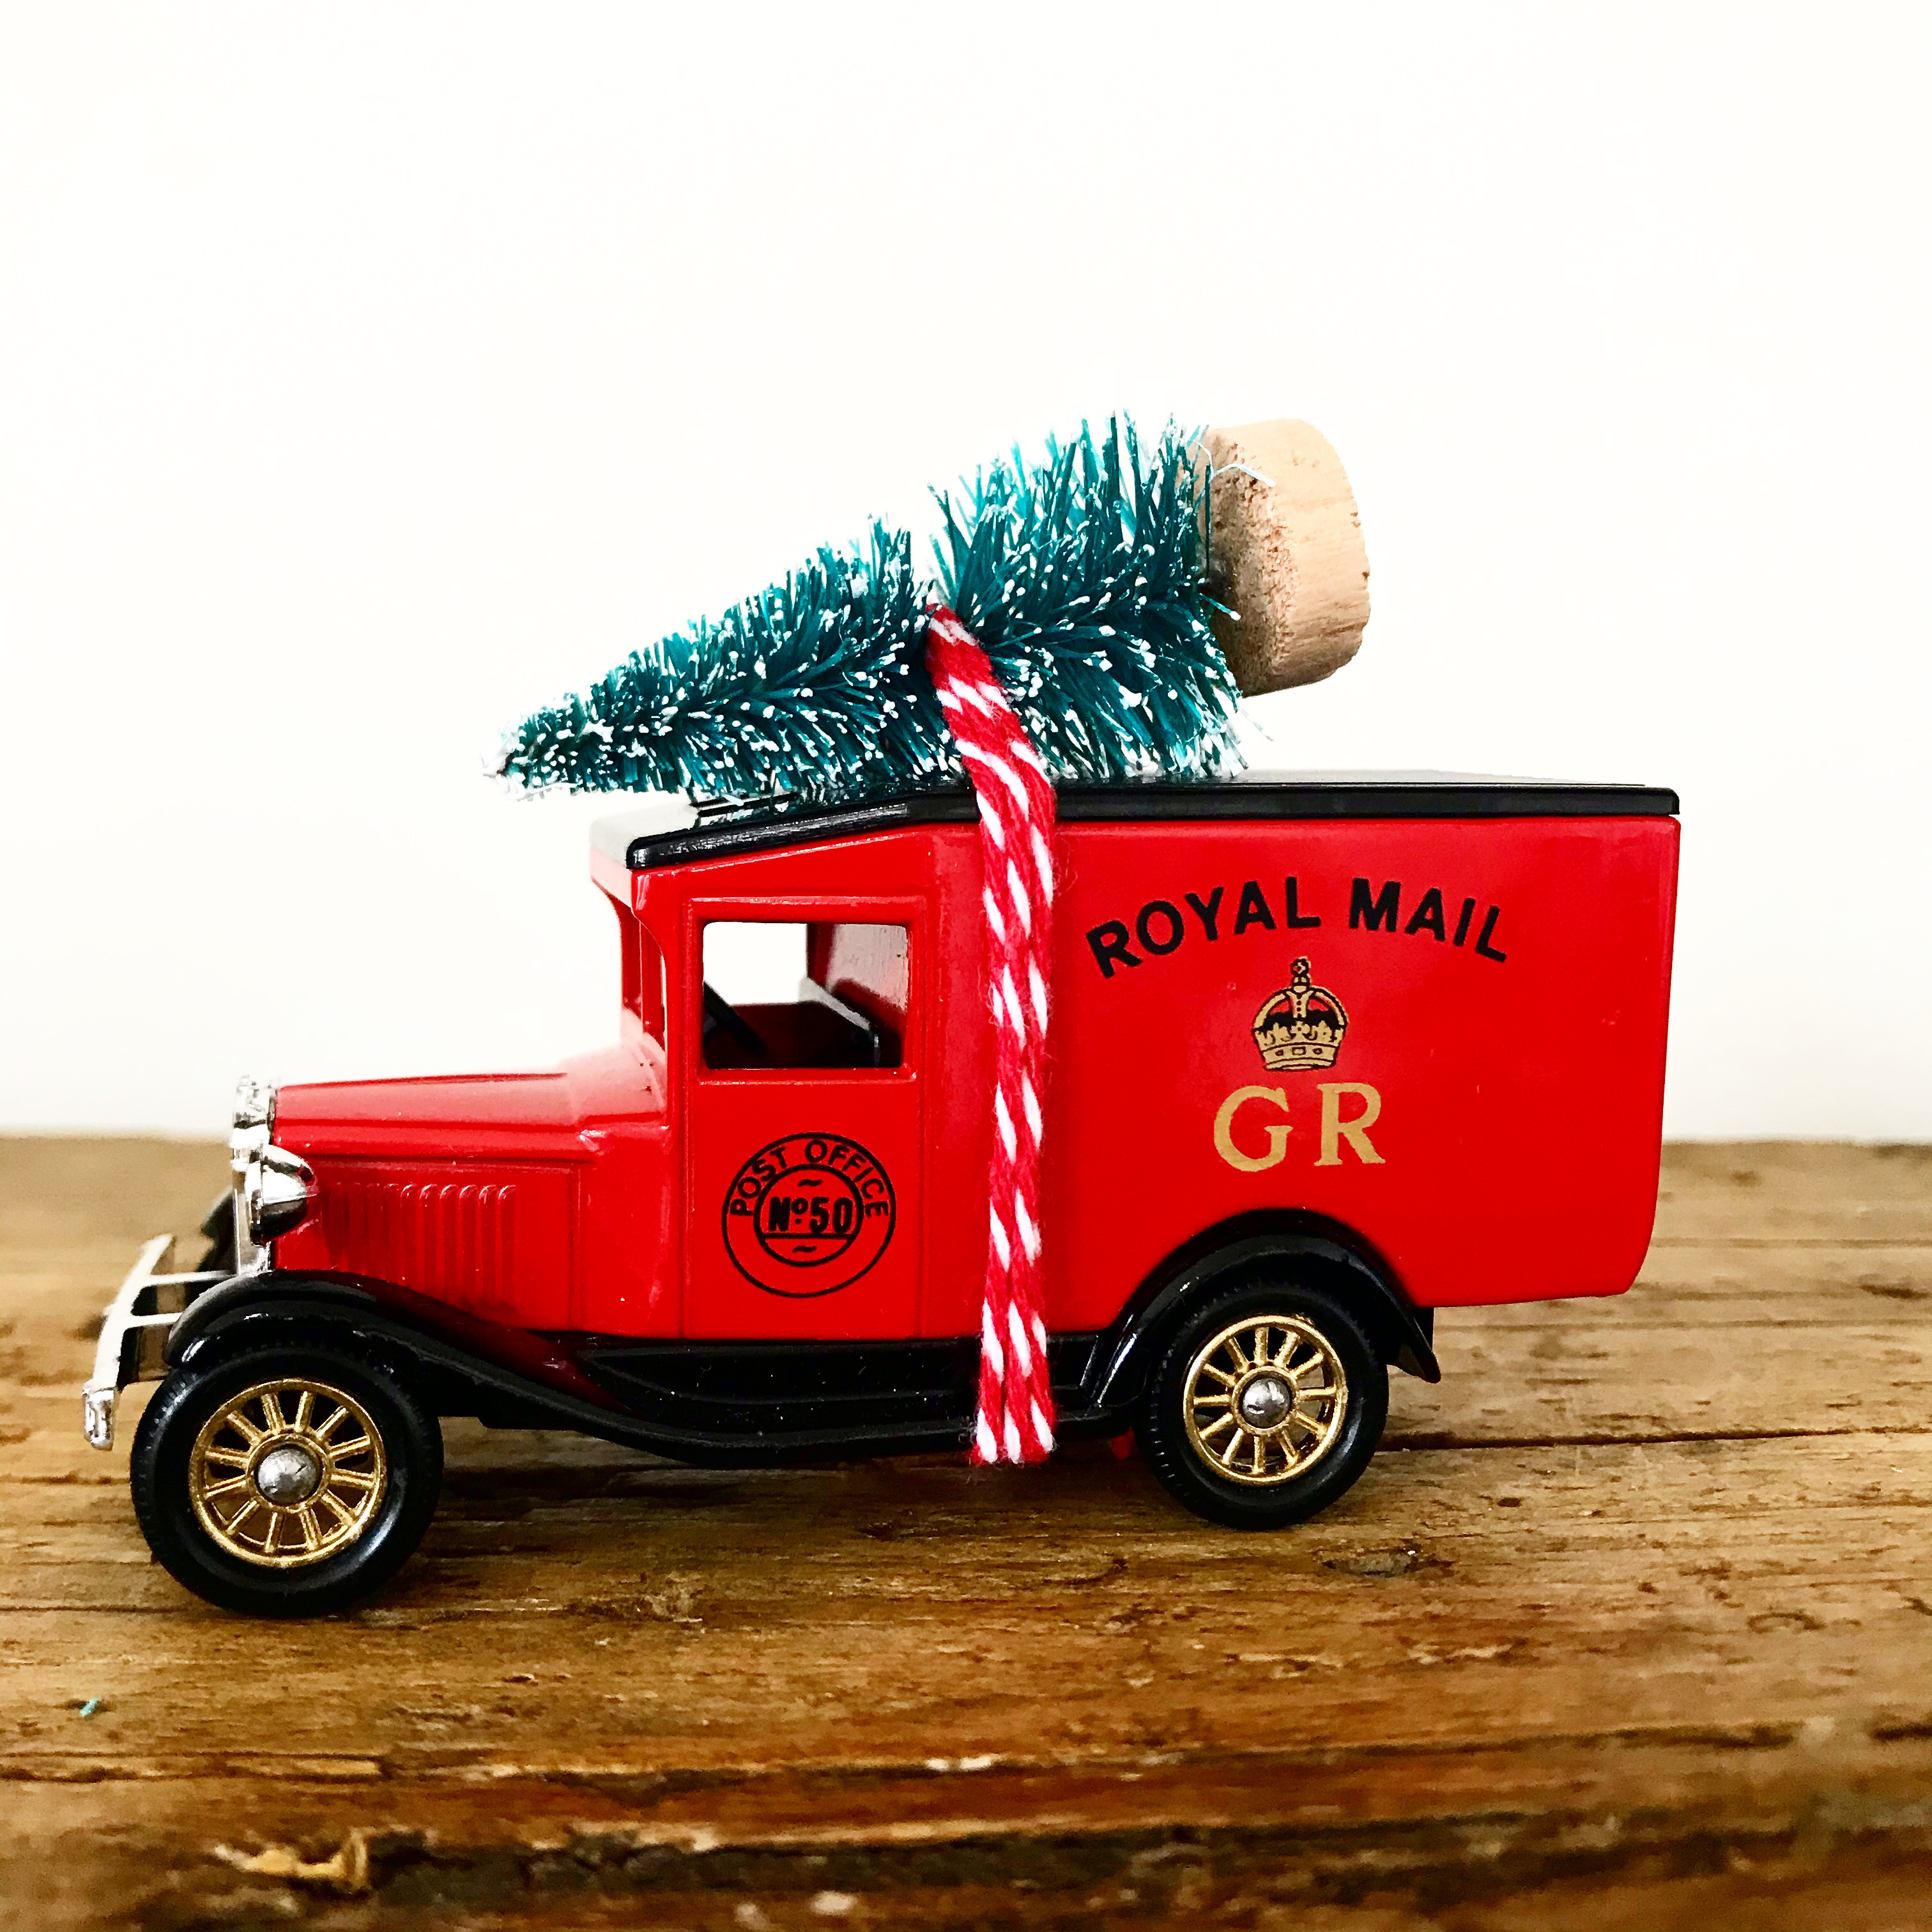 royal mail van toy